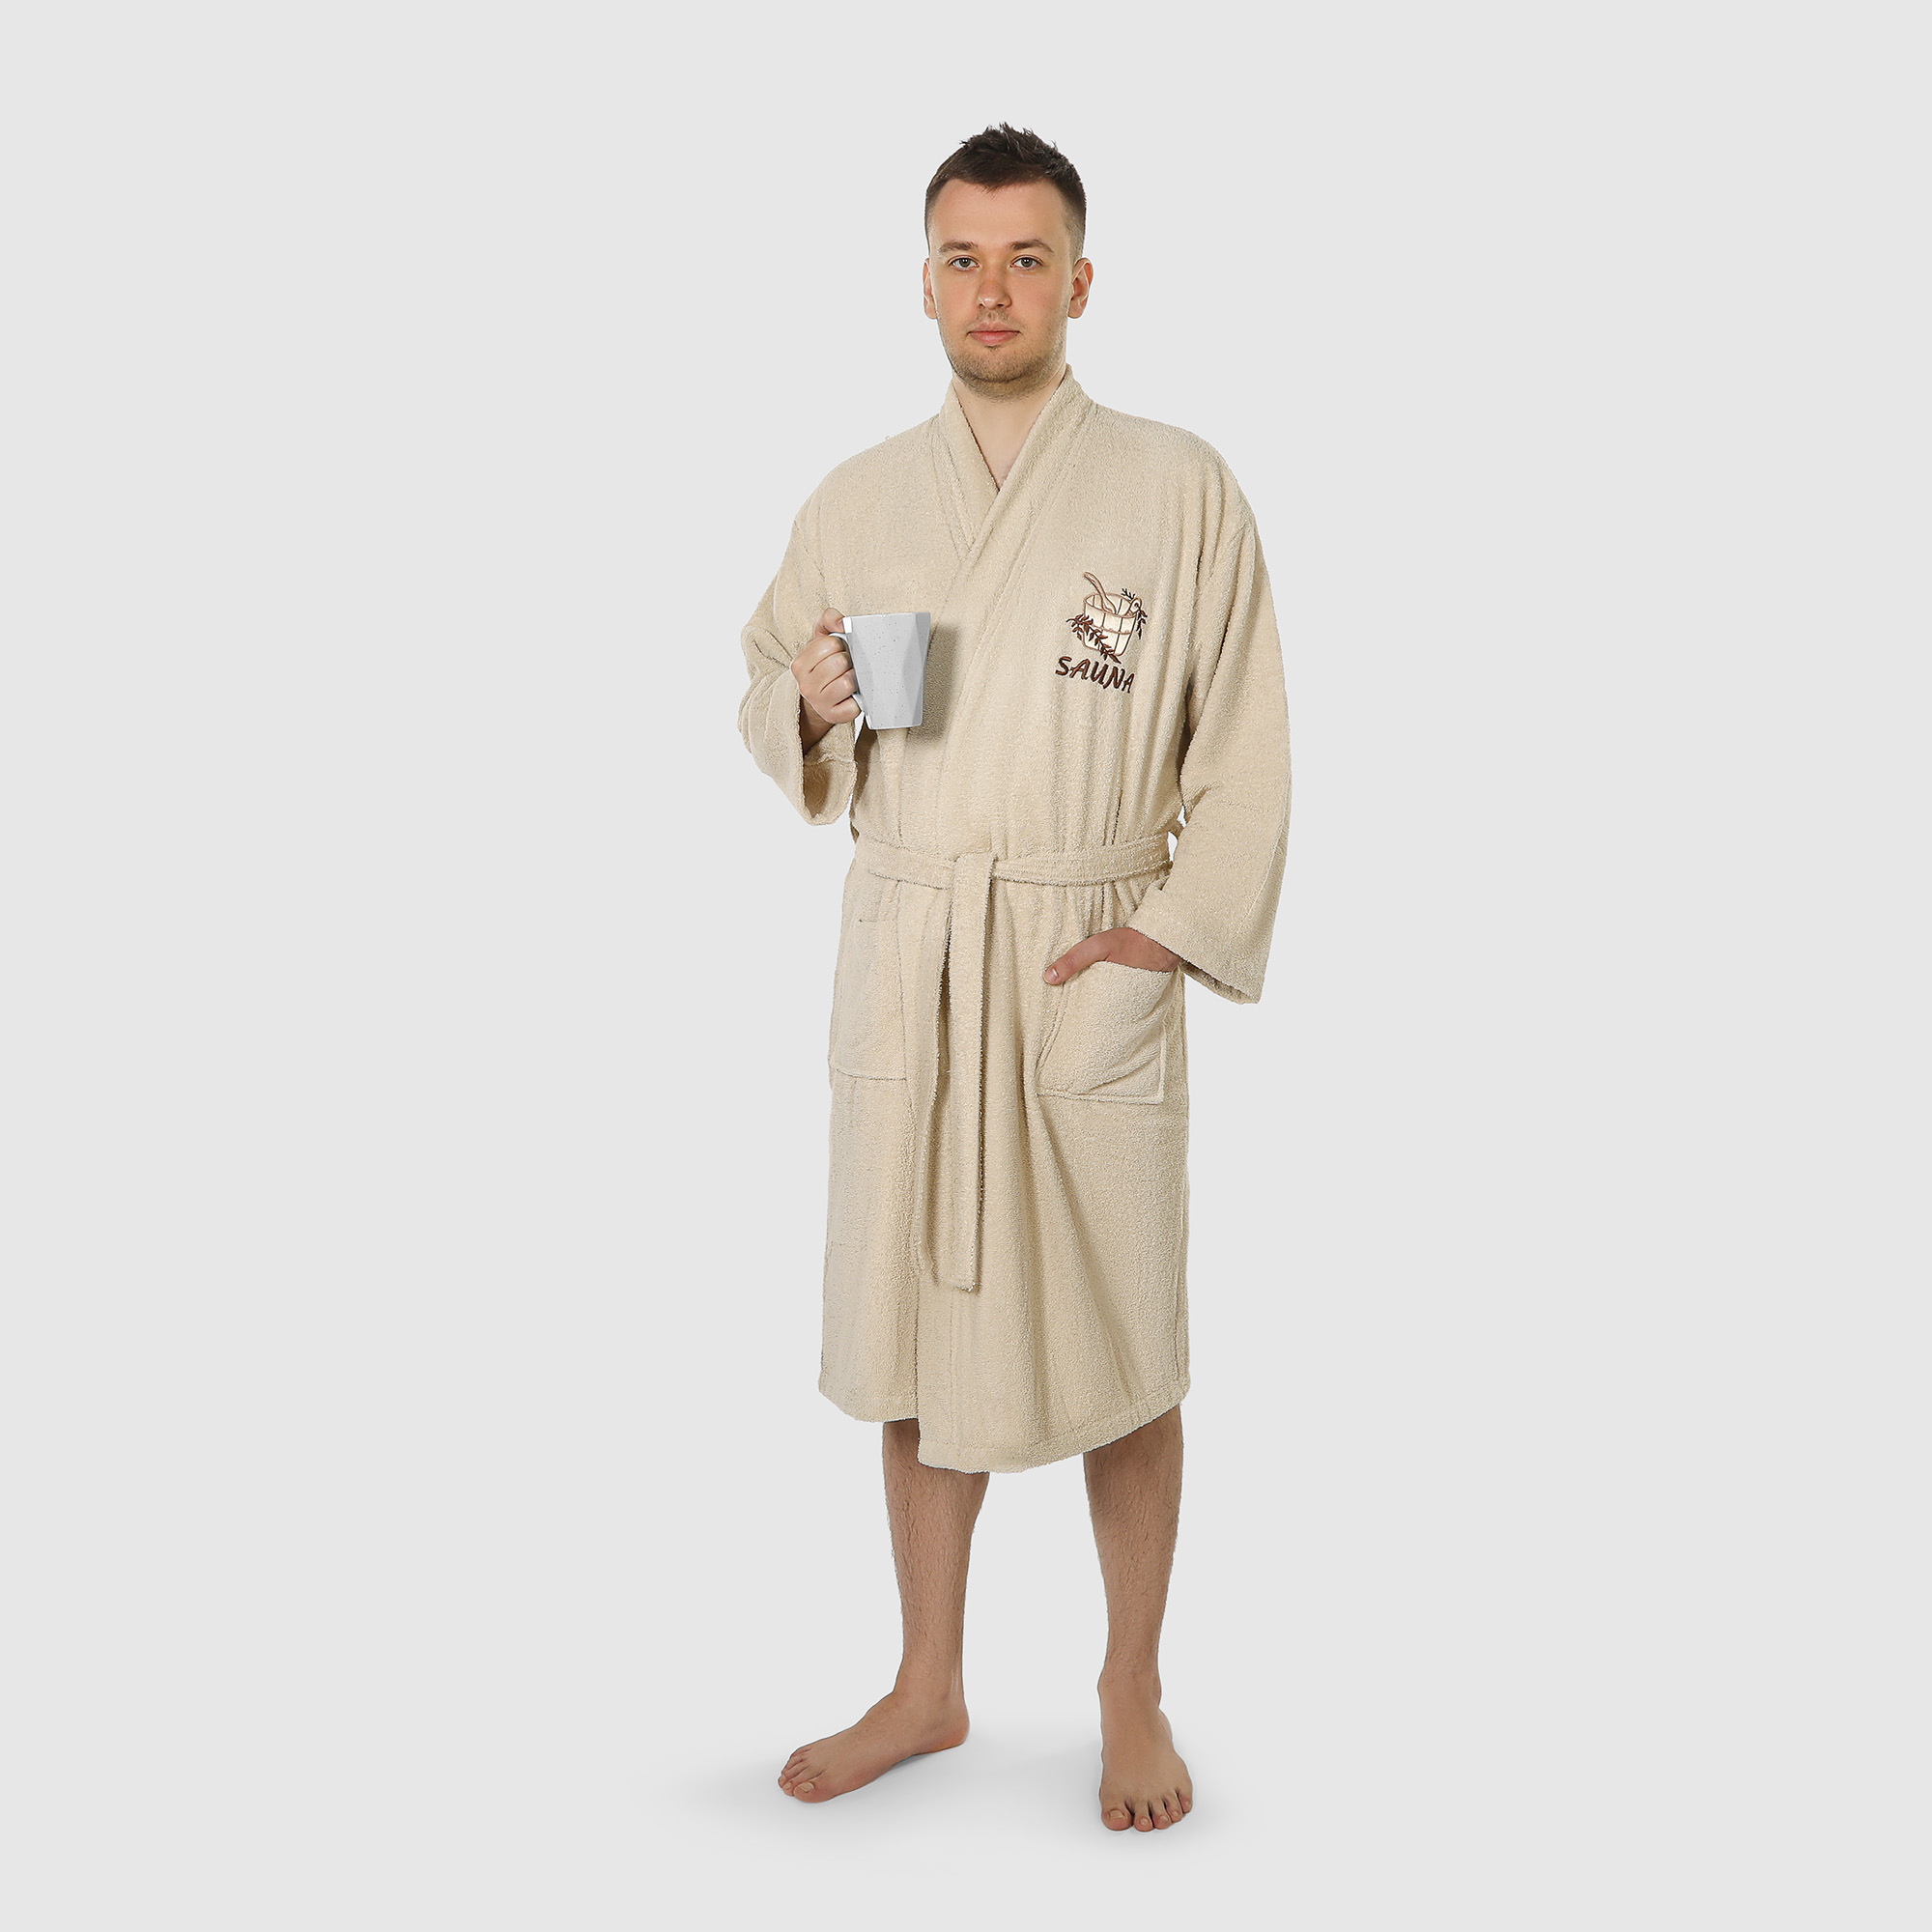 Халат мужской махровый Asil Sauna Kimono brown XL халат мужской asil sauna brown l махровый с капюшоном